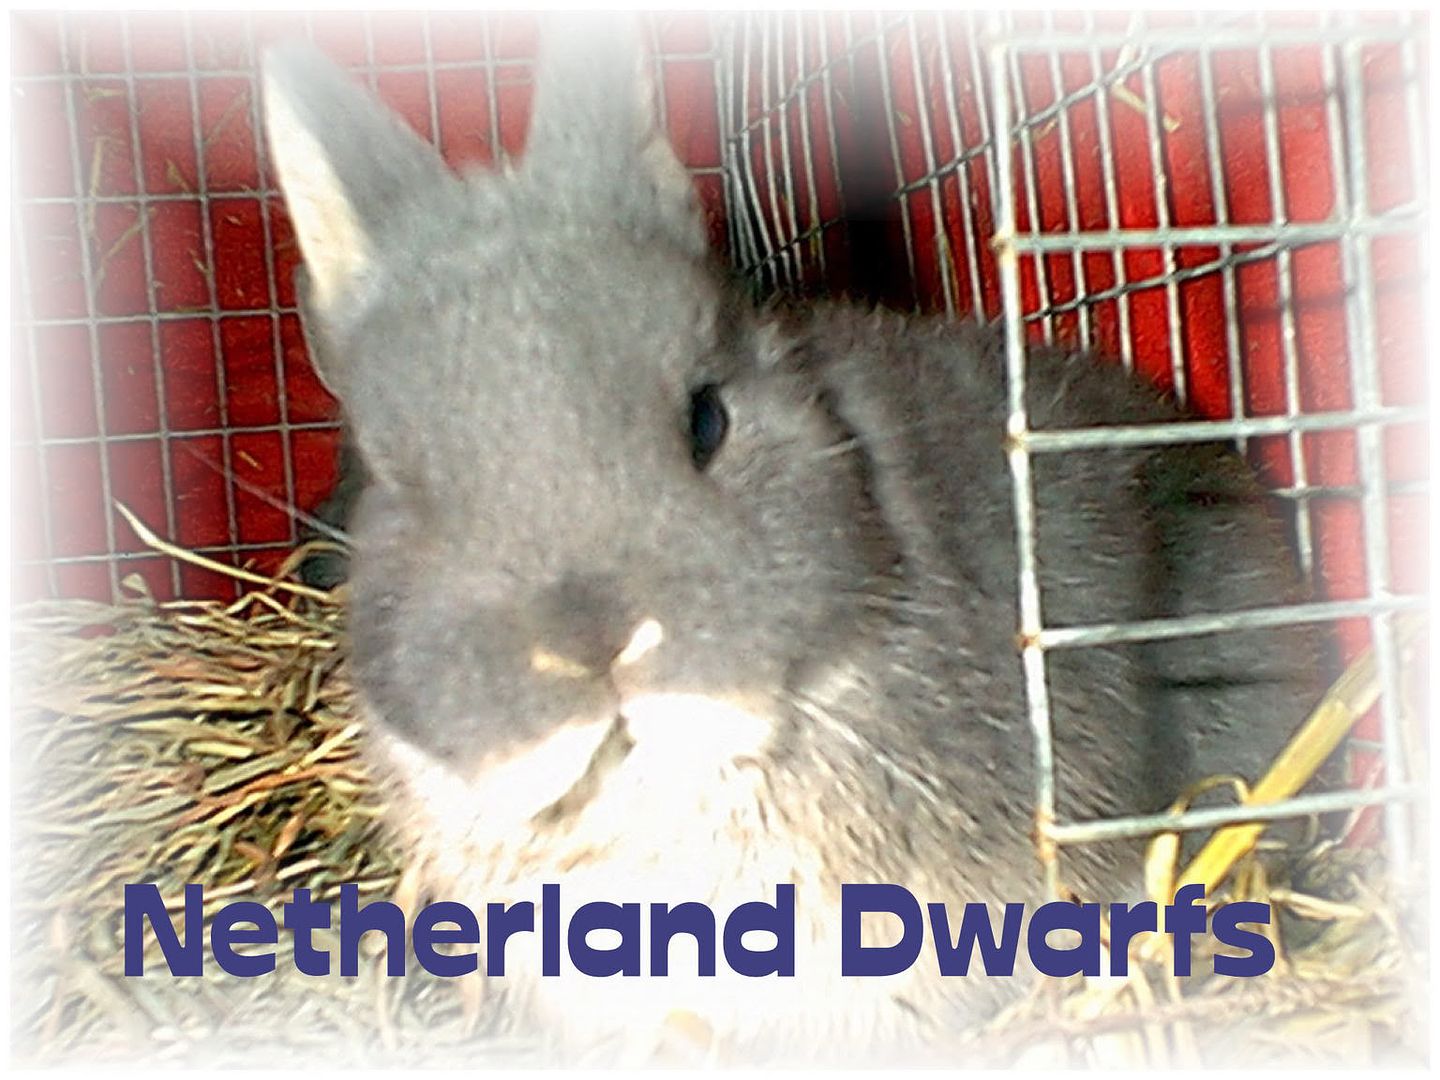 Our Netherland Dwarfs